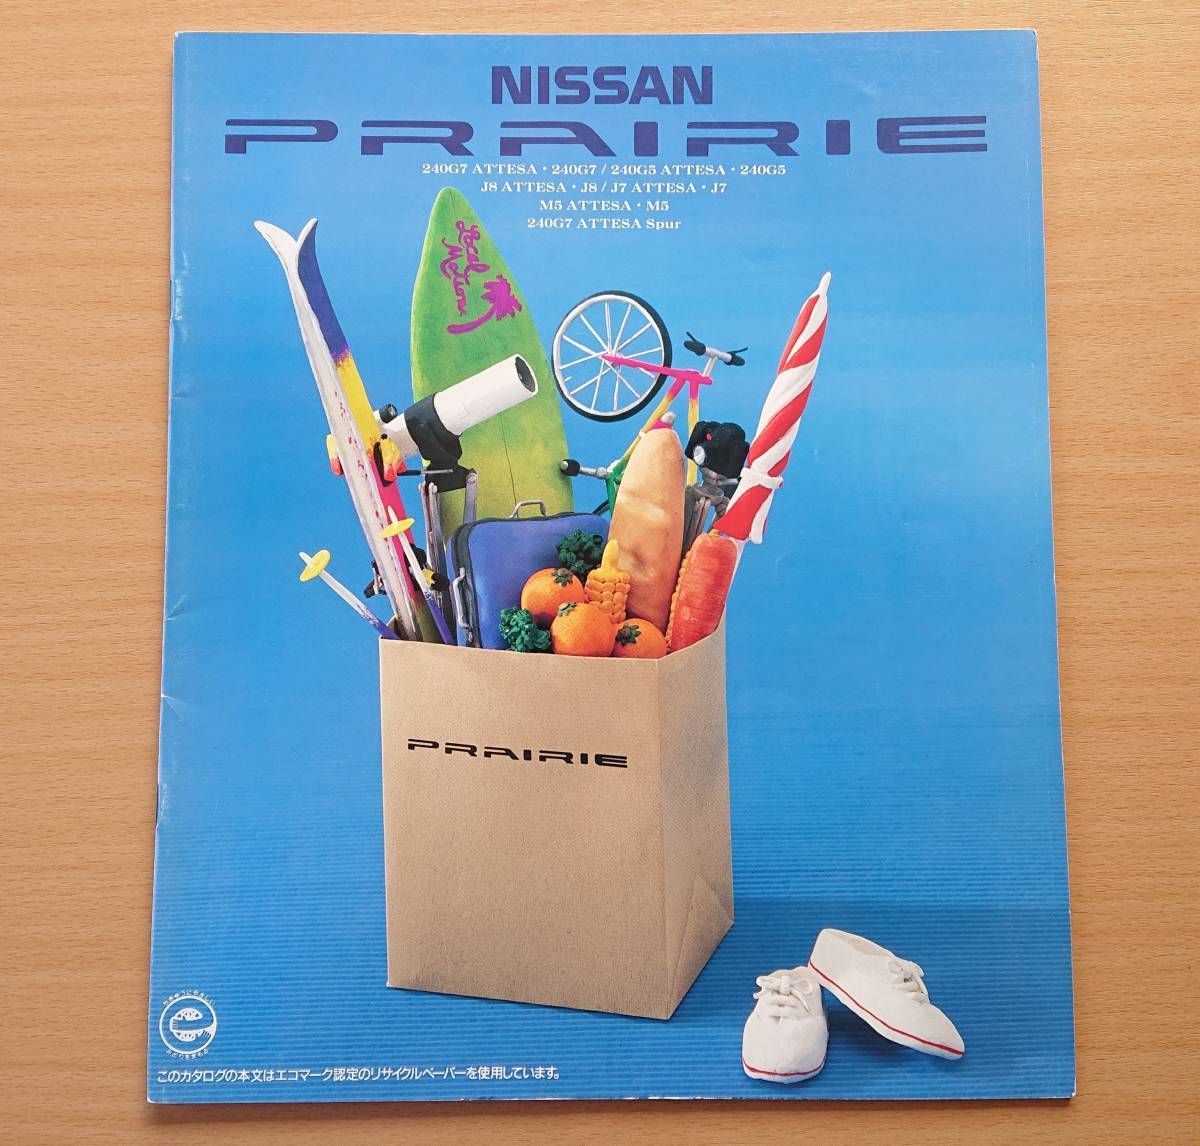 * Nissan * Prairie PRAIRIE M11 type 1992 year 2 month catalog * prompt decision price *